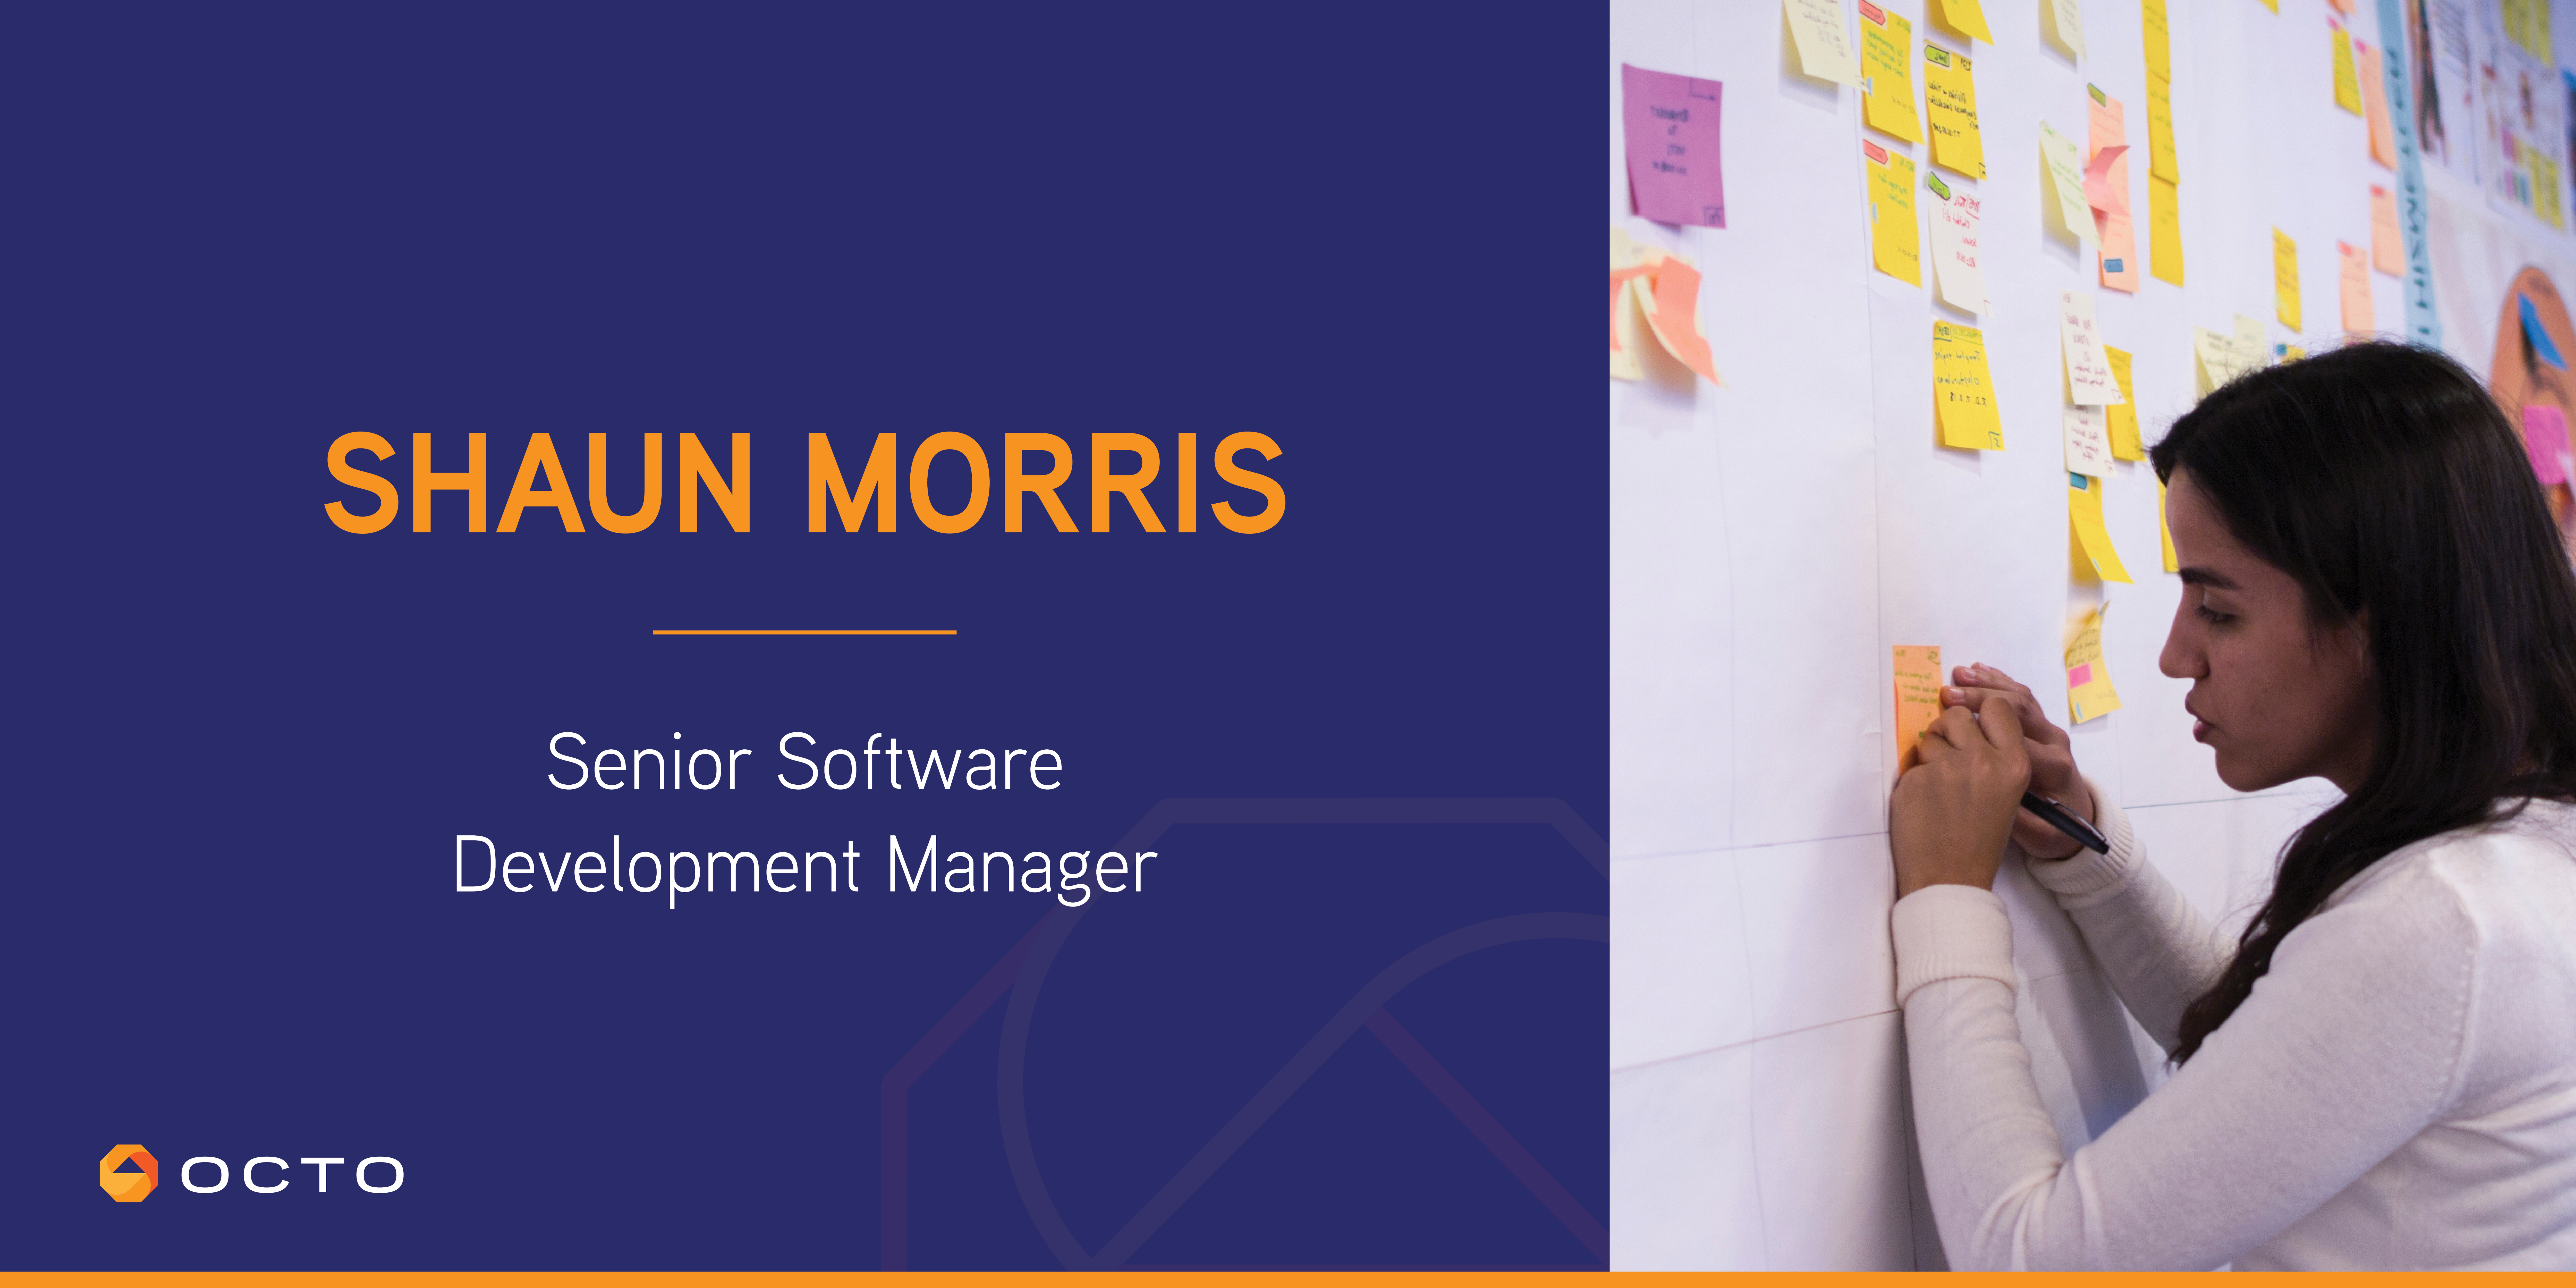 Shaun Morris - Senior Software Development Manager